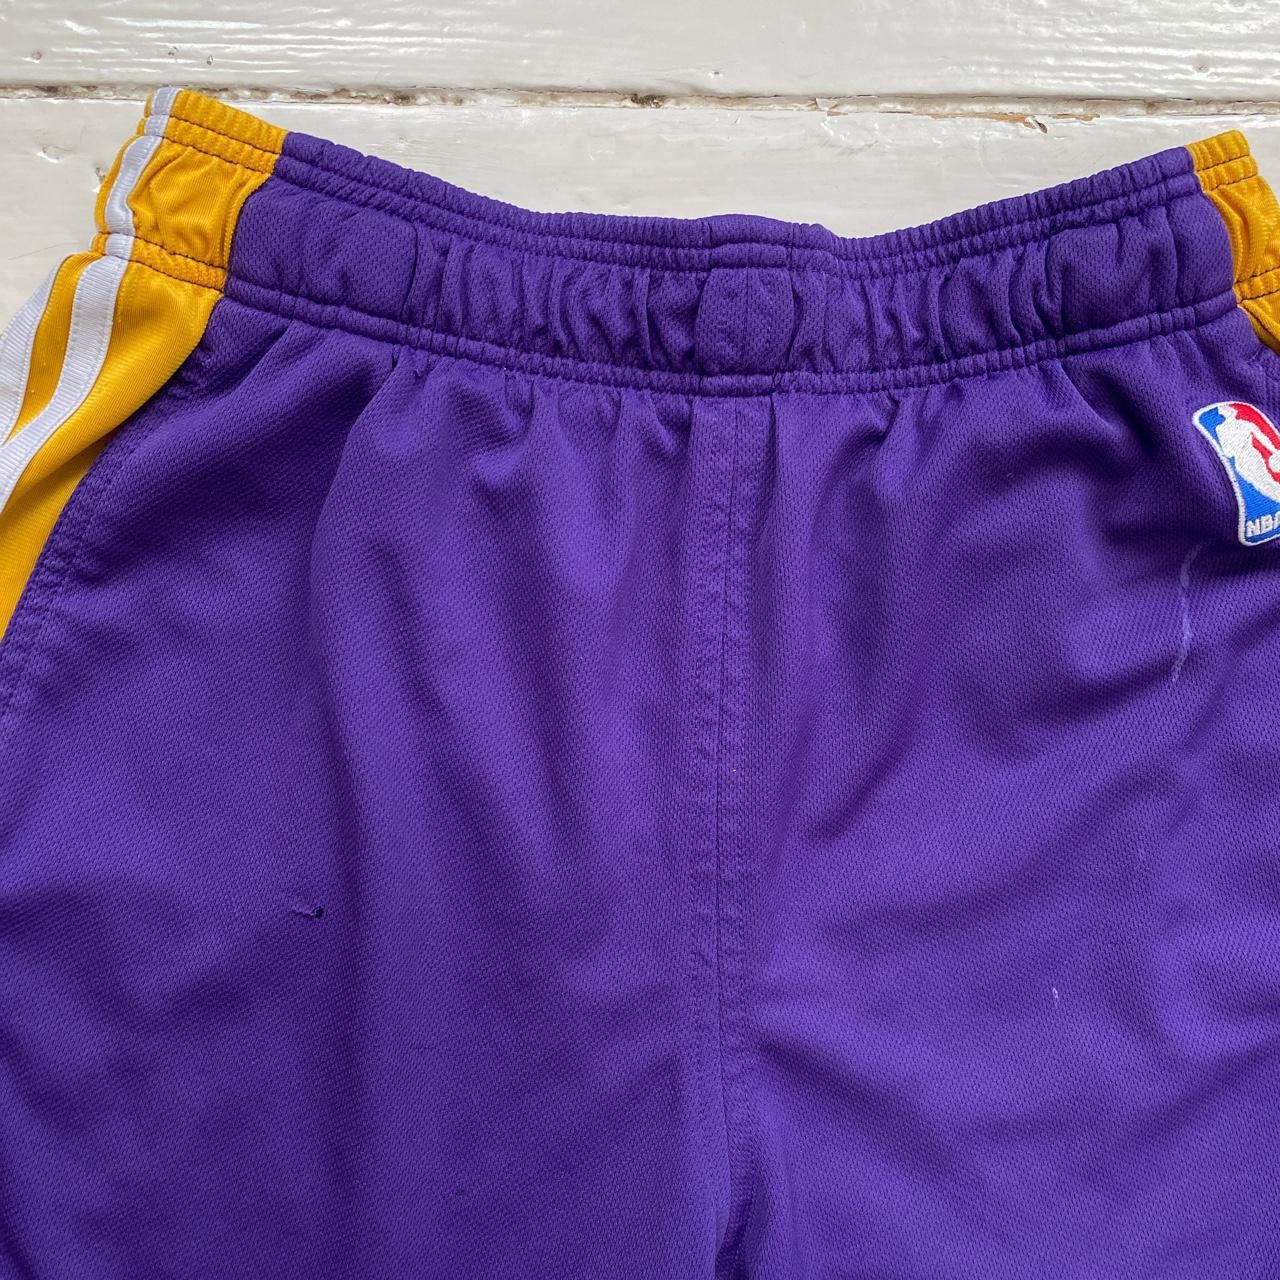 Adidas LA Lakers Shorts (Medium)